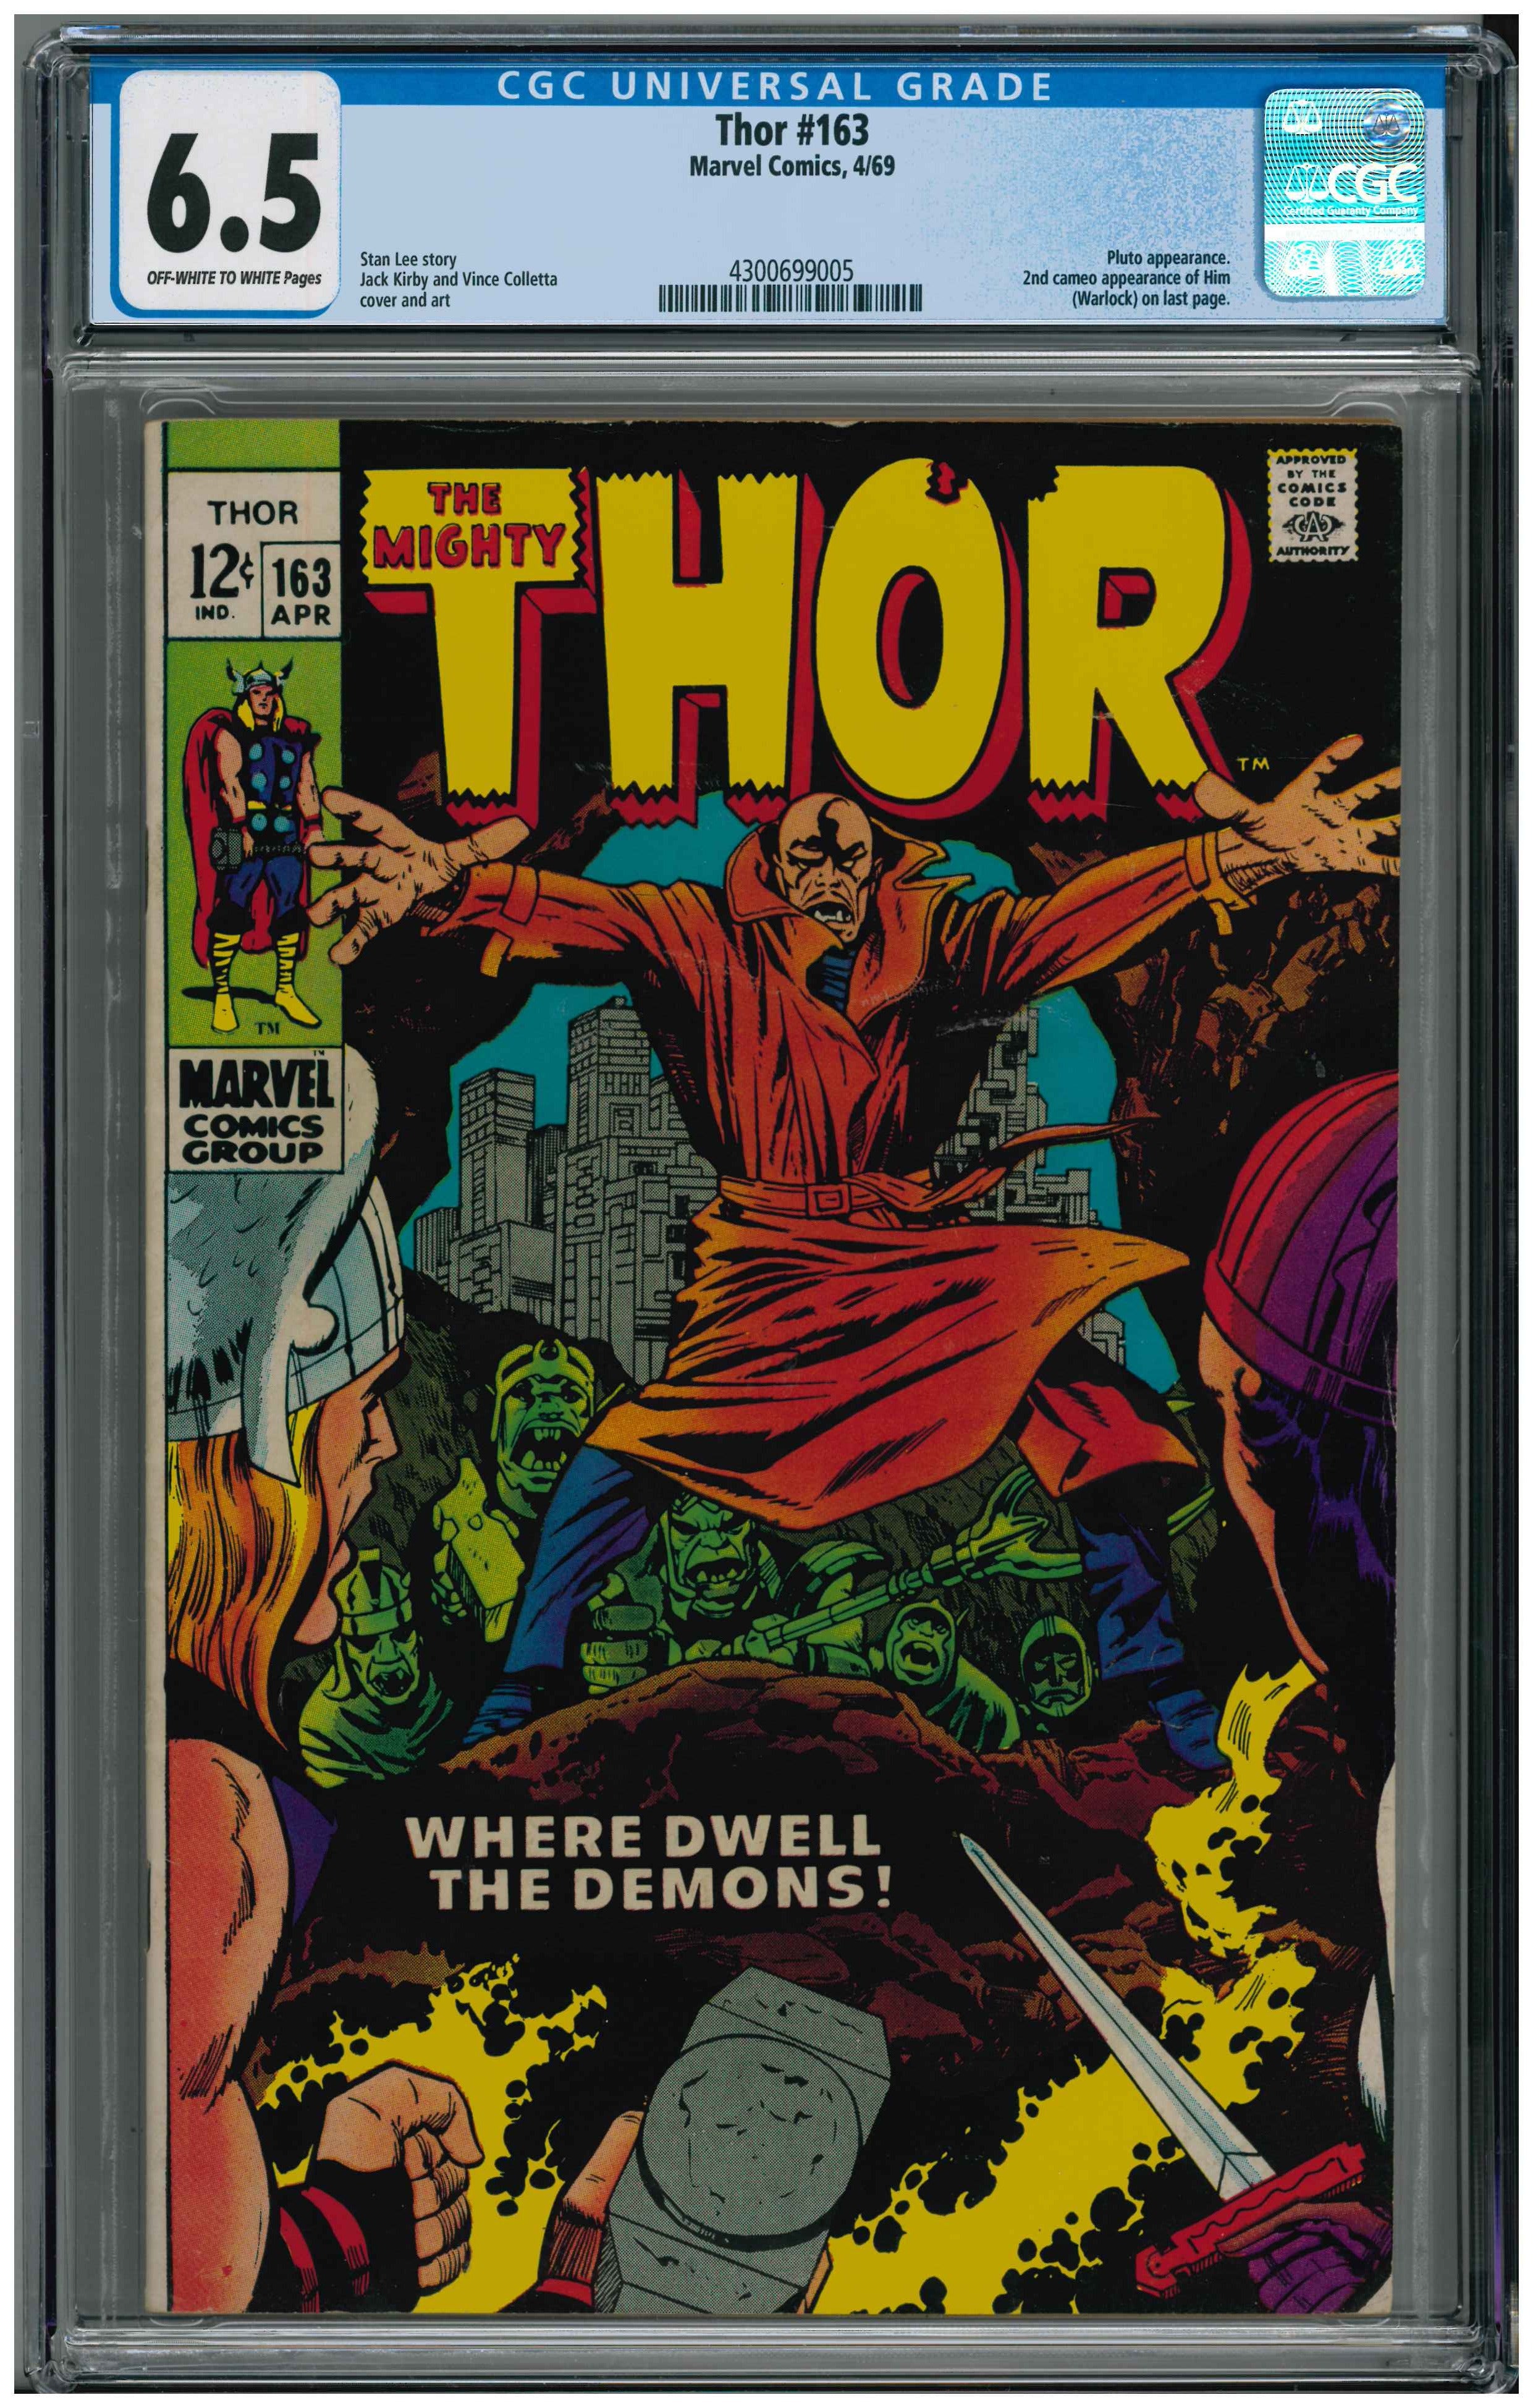 Thor #163